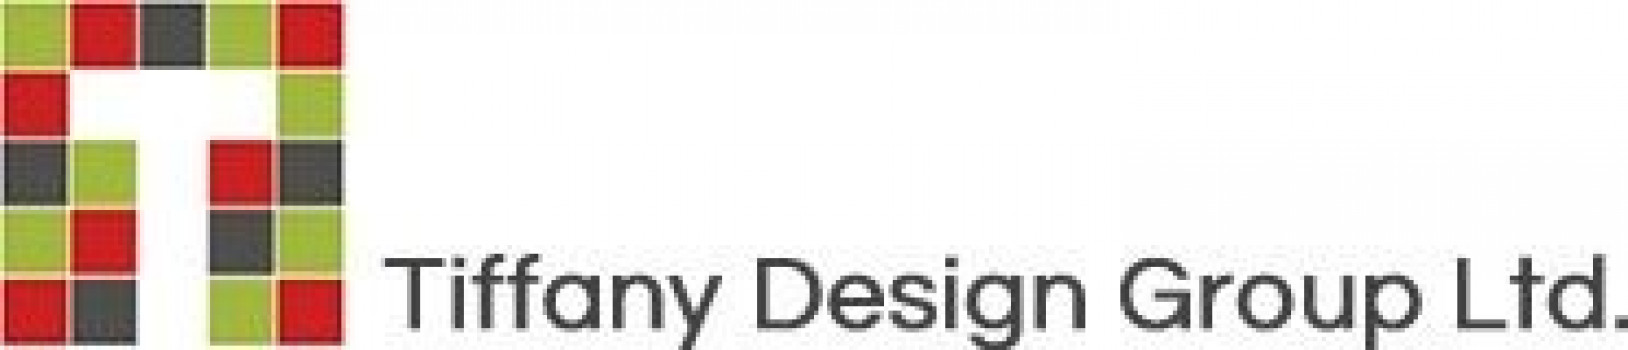 Tiffany Design Group Ltd